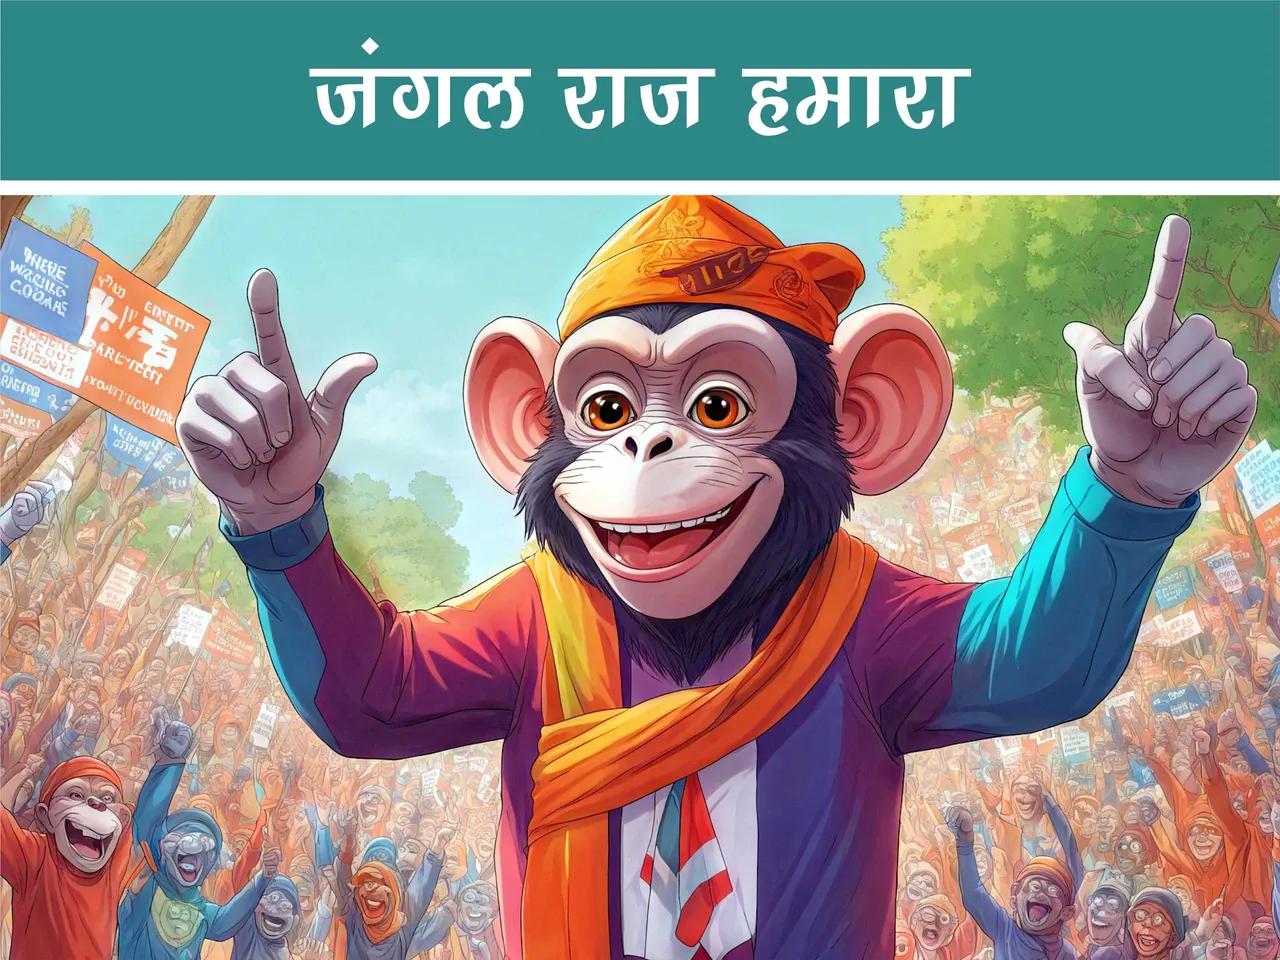 cartoon image of monkey dancing